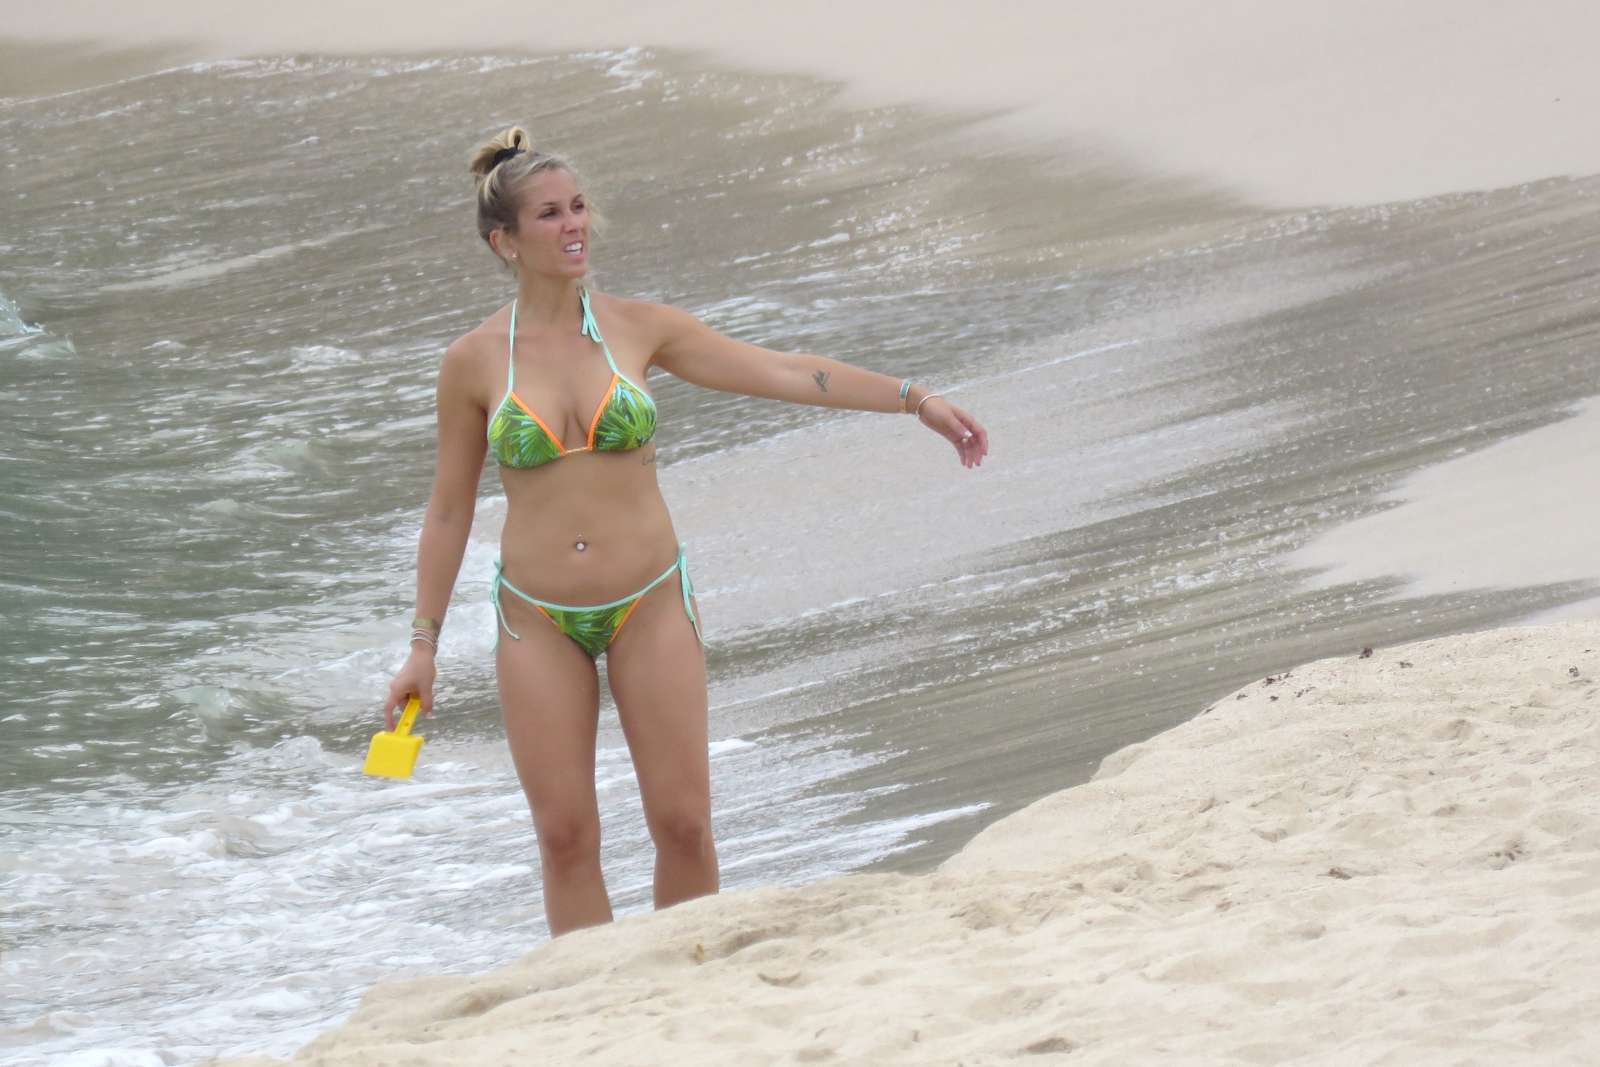 Solfia Balbi in Bikini at a beach in St Barts.